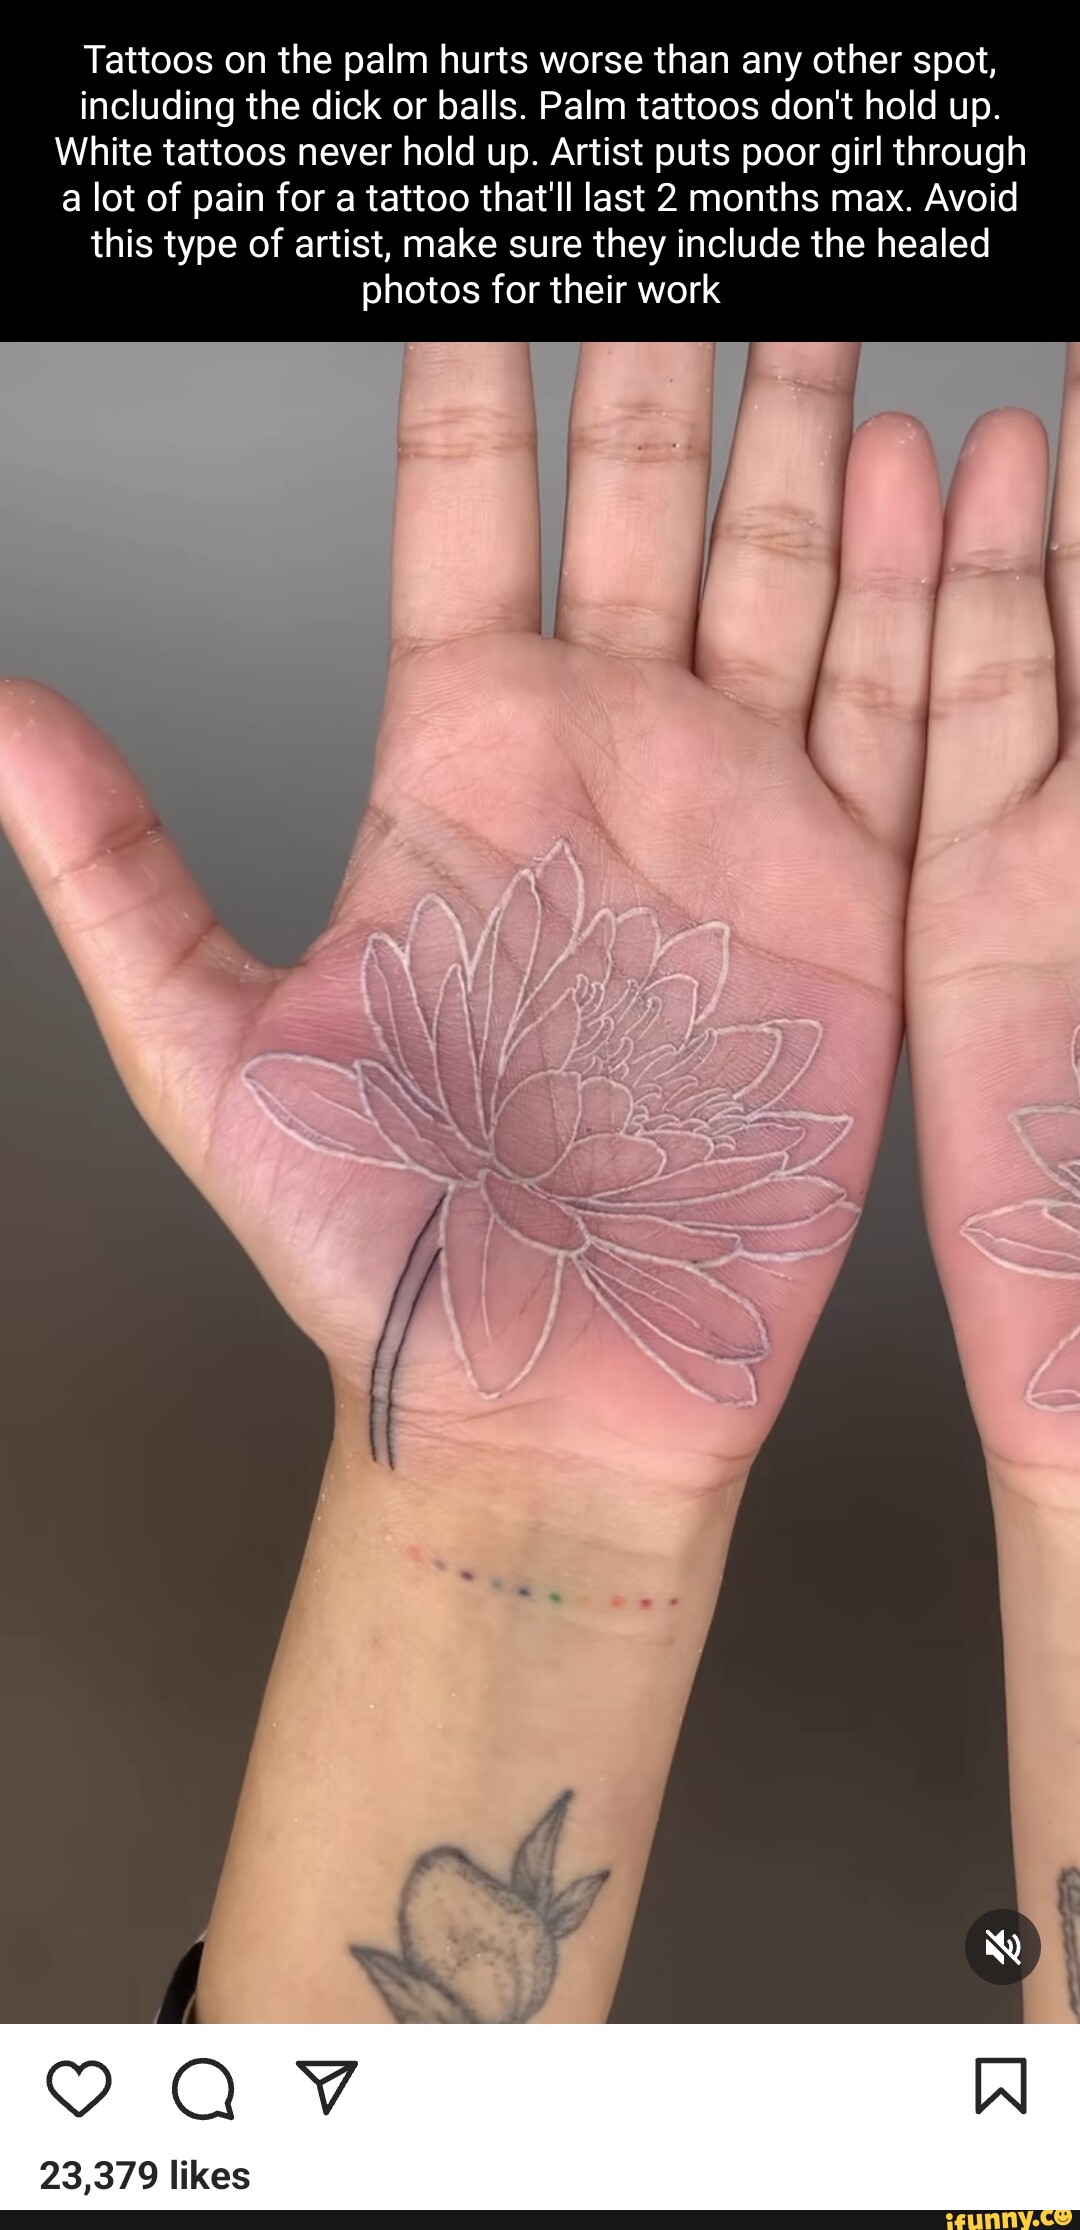 Why Everyone Wants Their Palms Tattooed by Luke Ashley